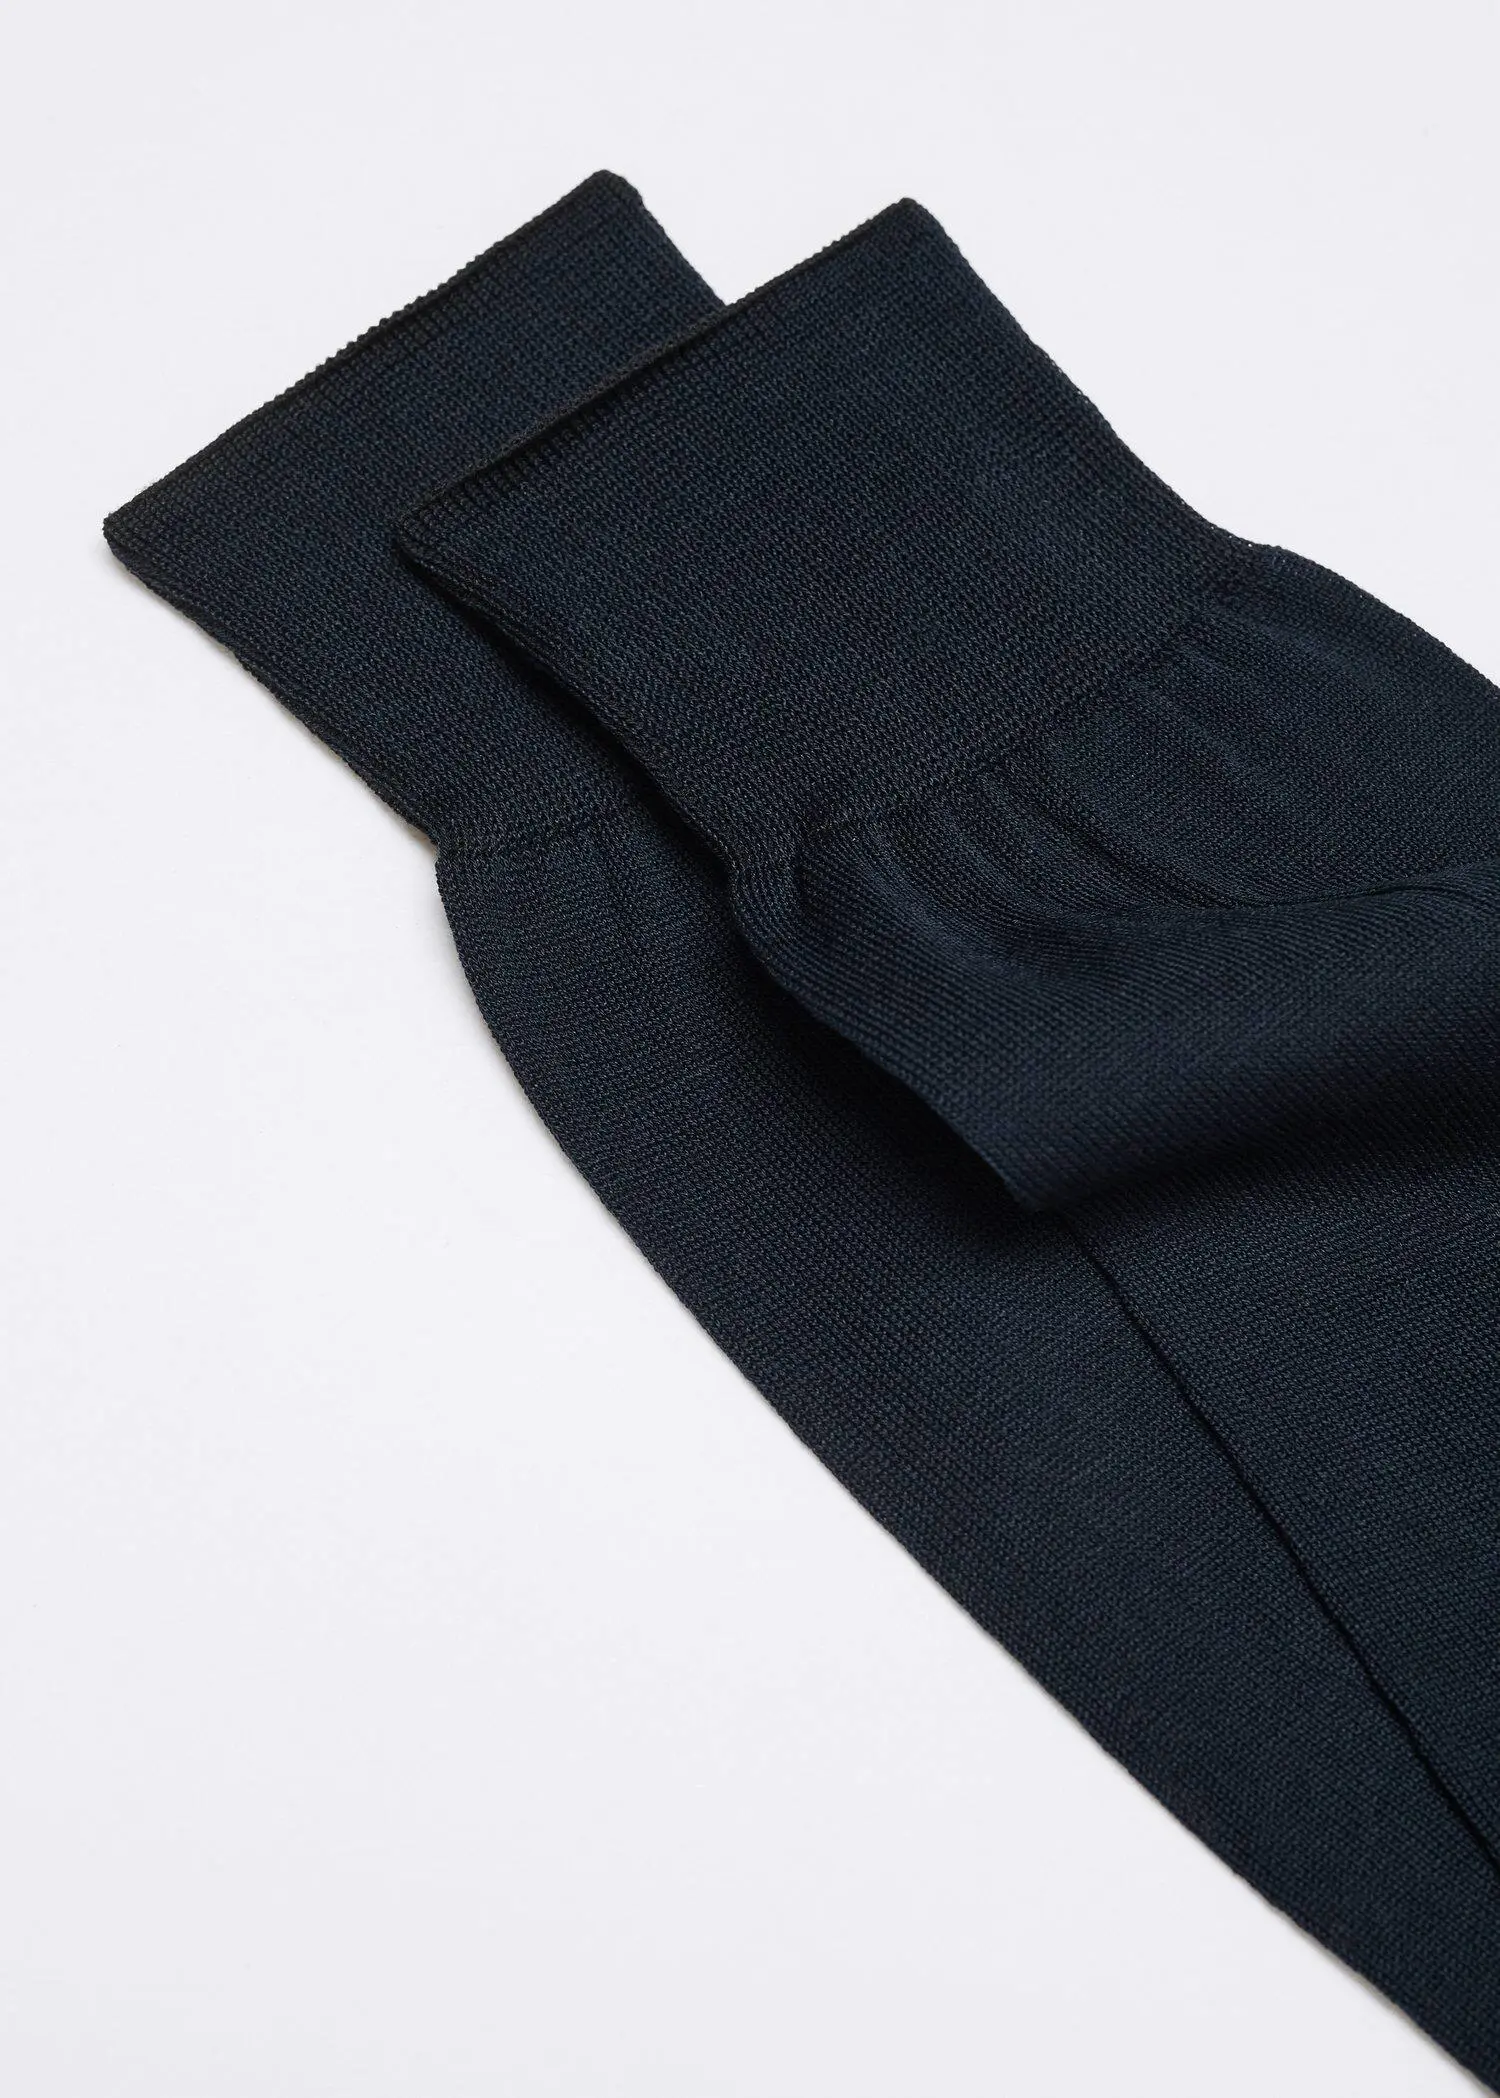 Mango 100% plain cotton socks. a close up of a pair of black socks. 